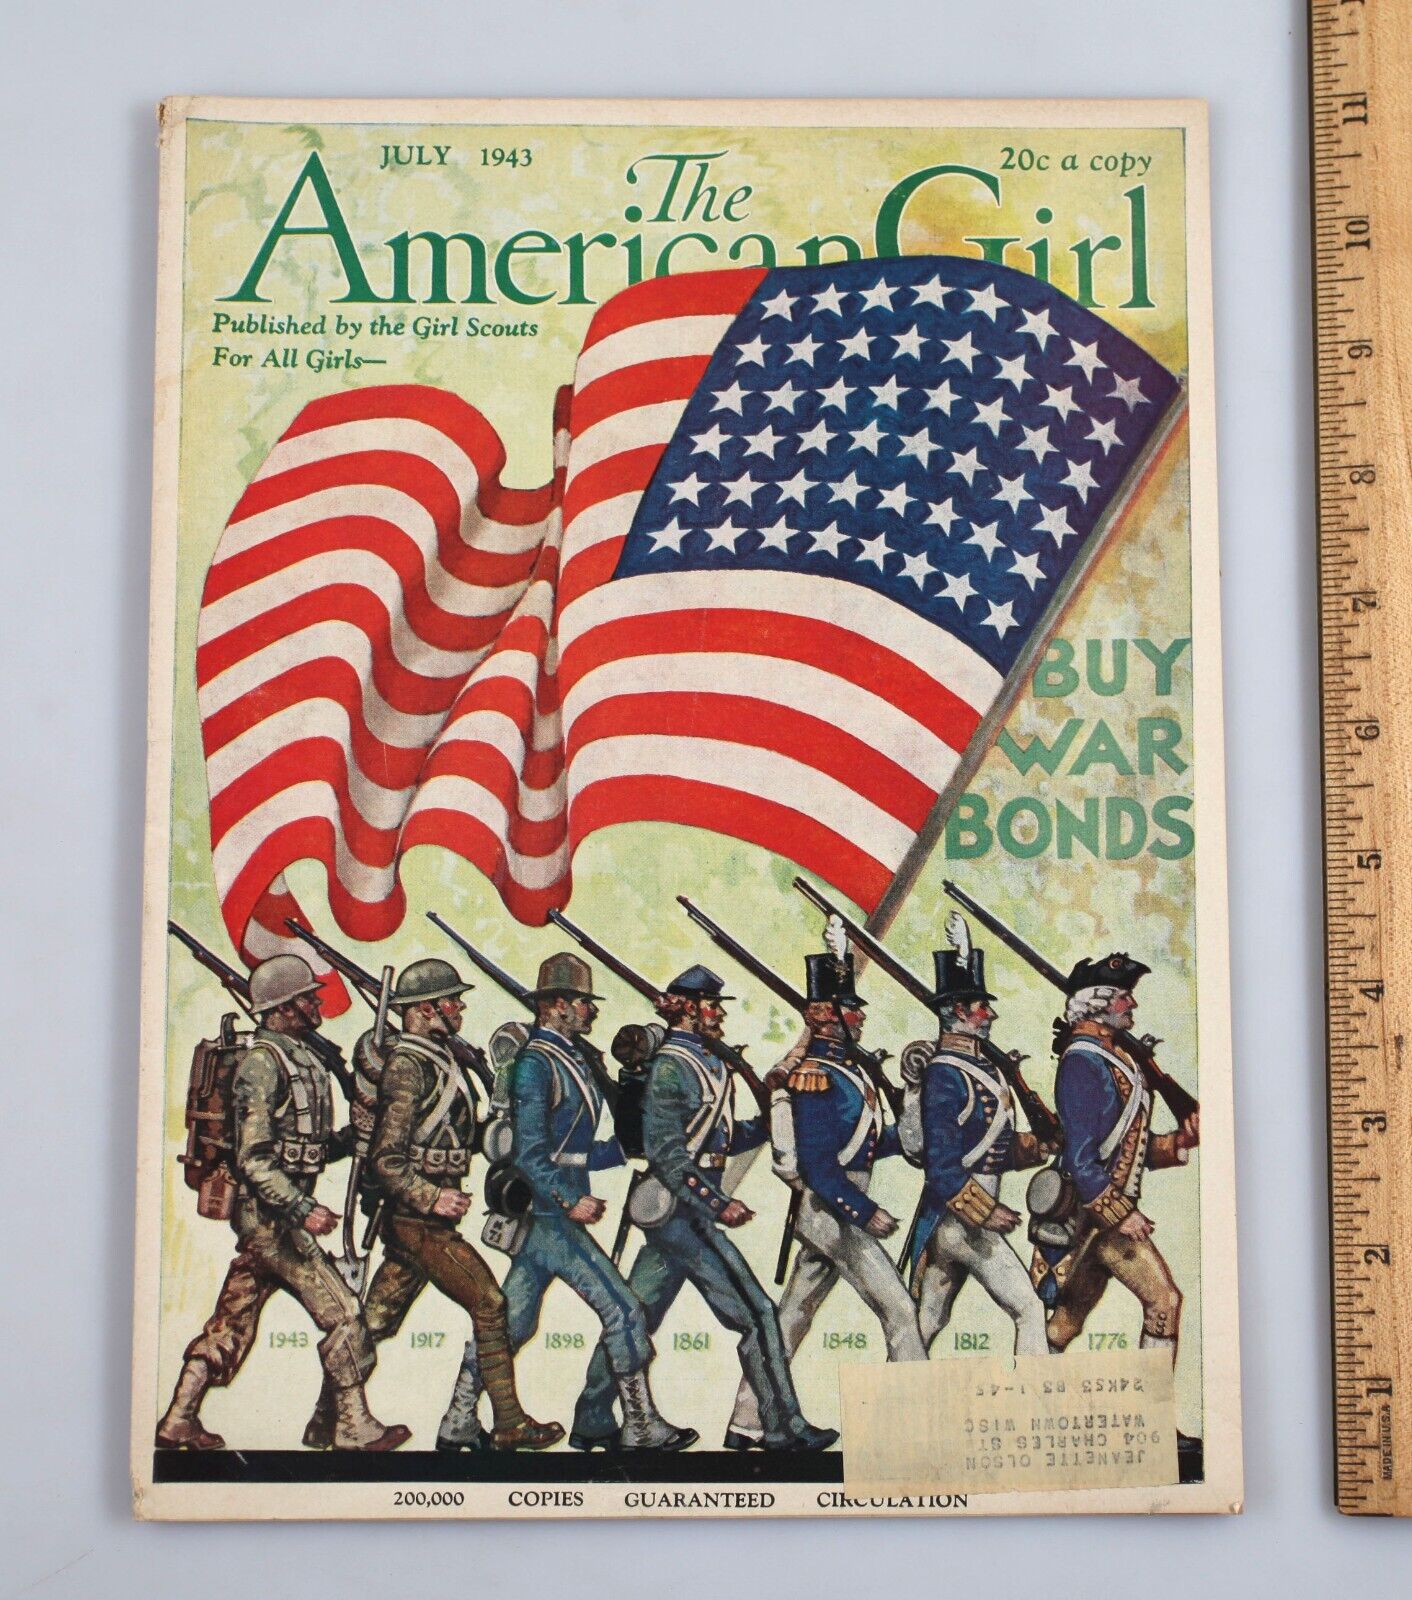 Vintage July 1943 Girls Scouts Magazine The American Girl   Buy War Bonds Era